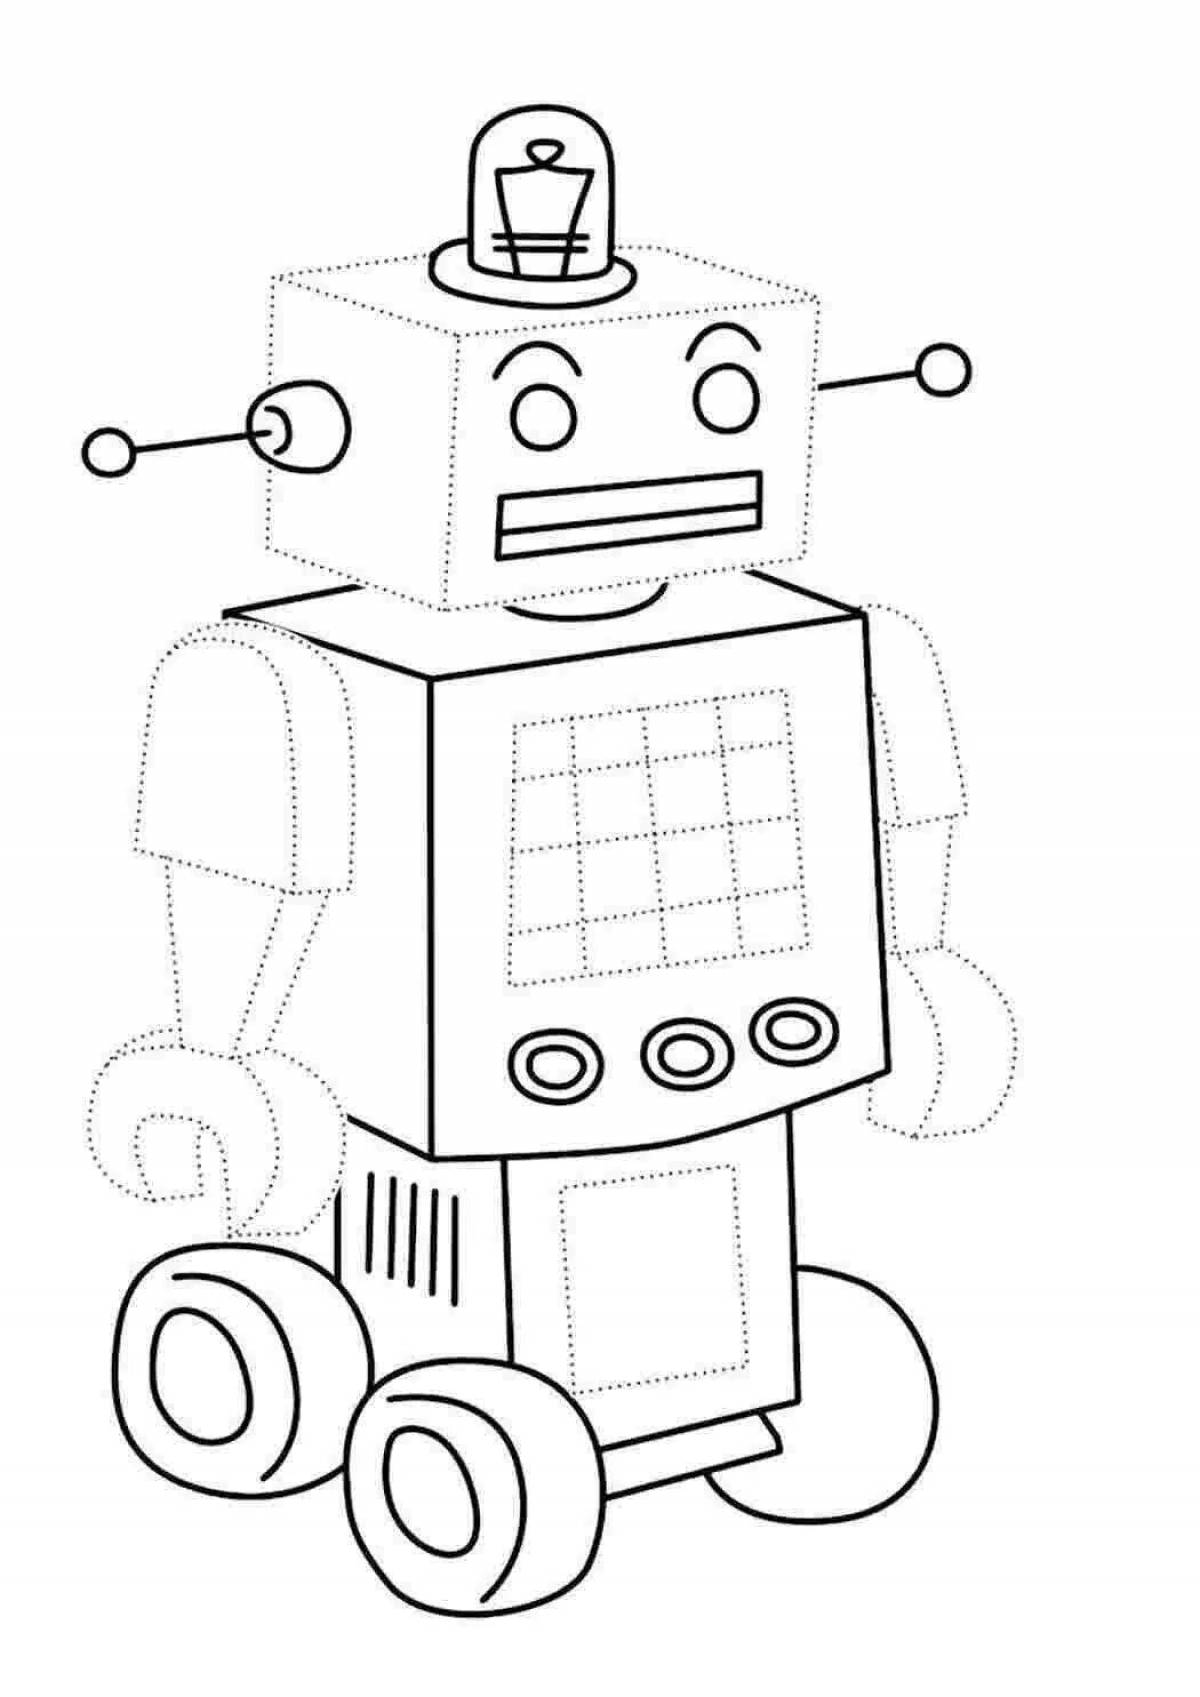 Машина робот рисунок. Раскраски. Роботы. Робот рисунок. Робот рисунок карандашом. Детские раскраски роботы.